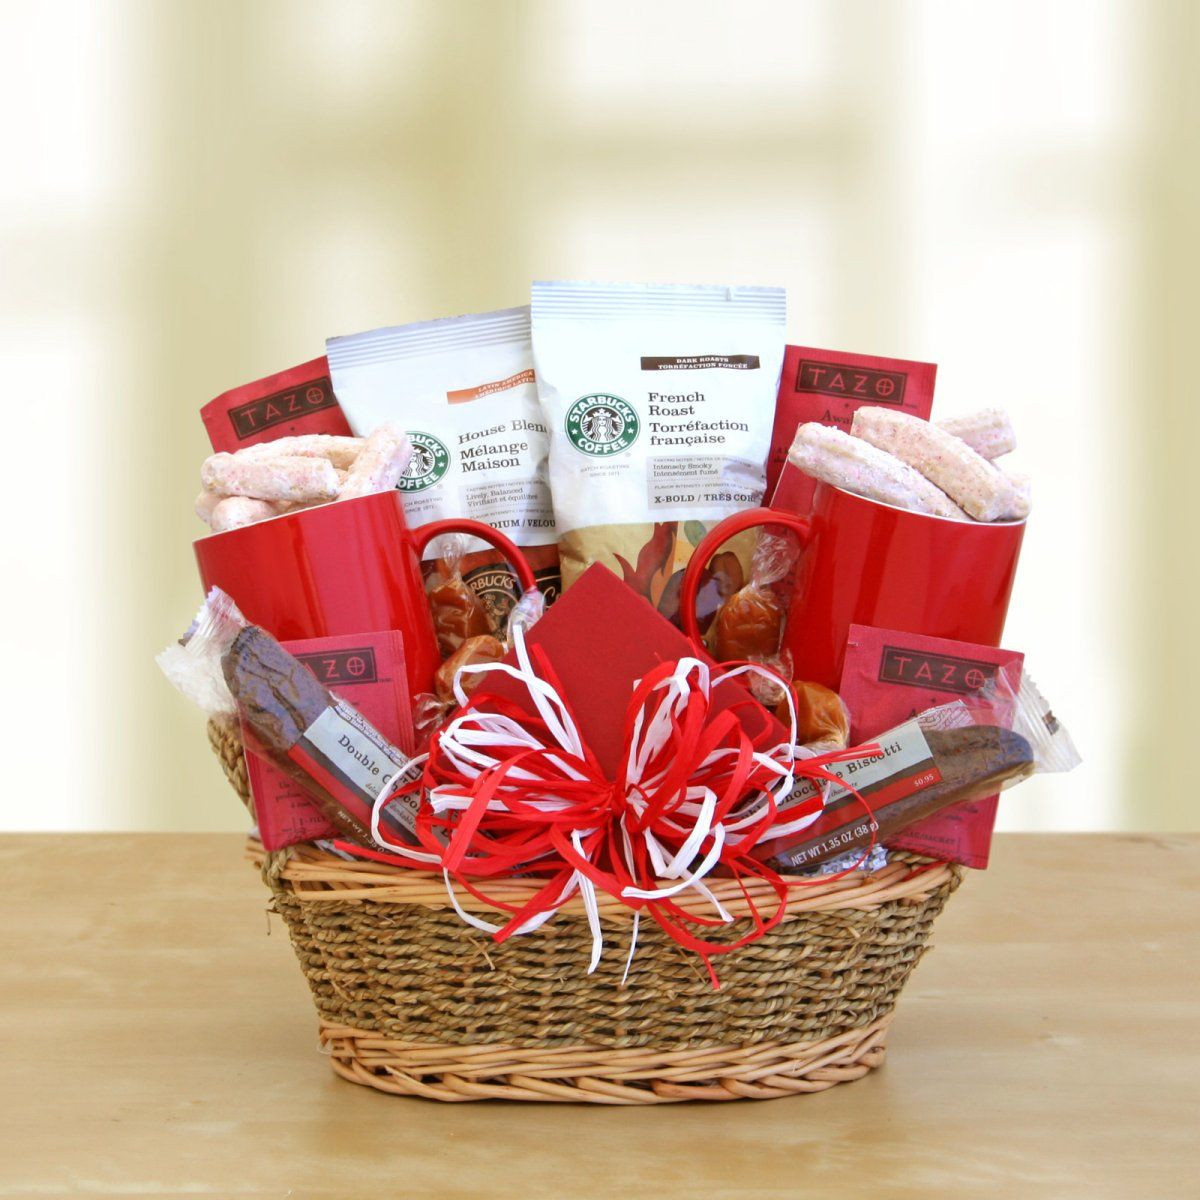 Best ideas about Starbucks Gift Basket Ideas
. Save or Pin Sharing Starbucks Gift Basket Now.